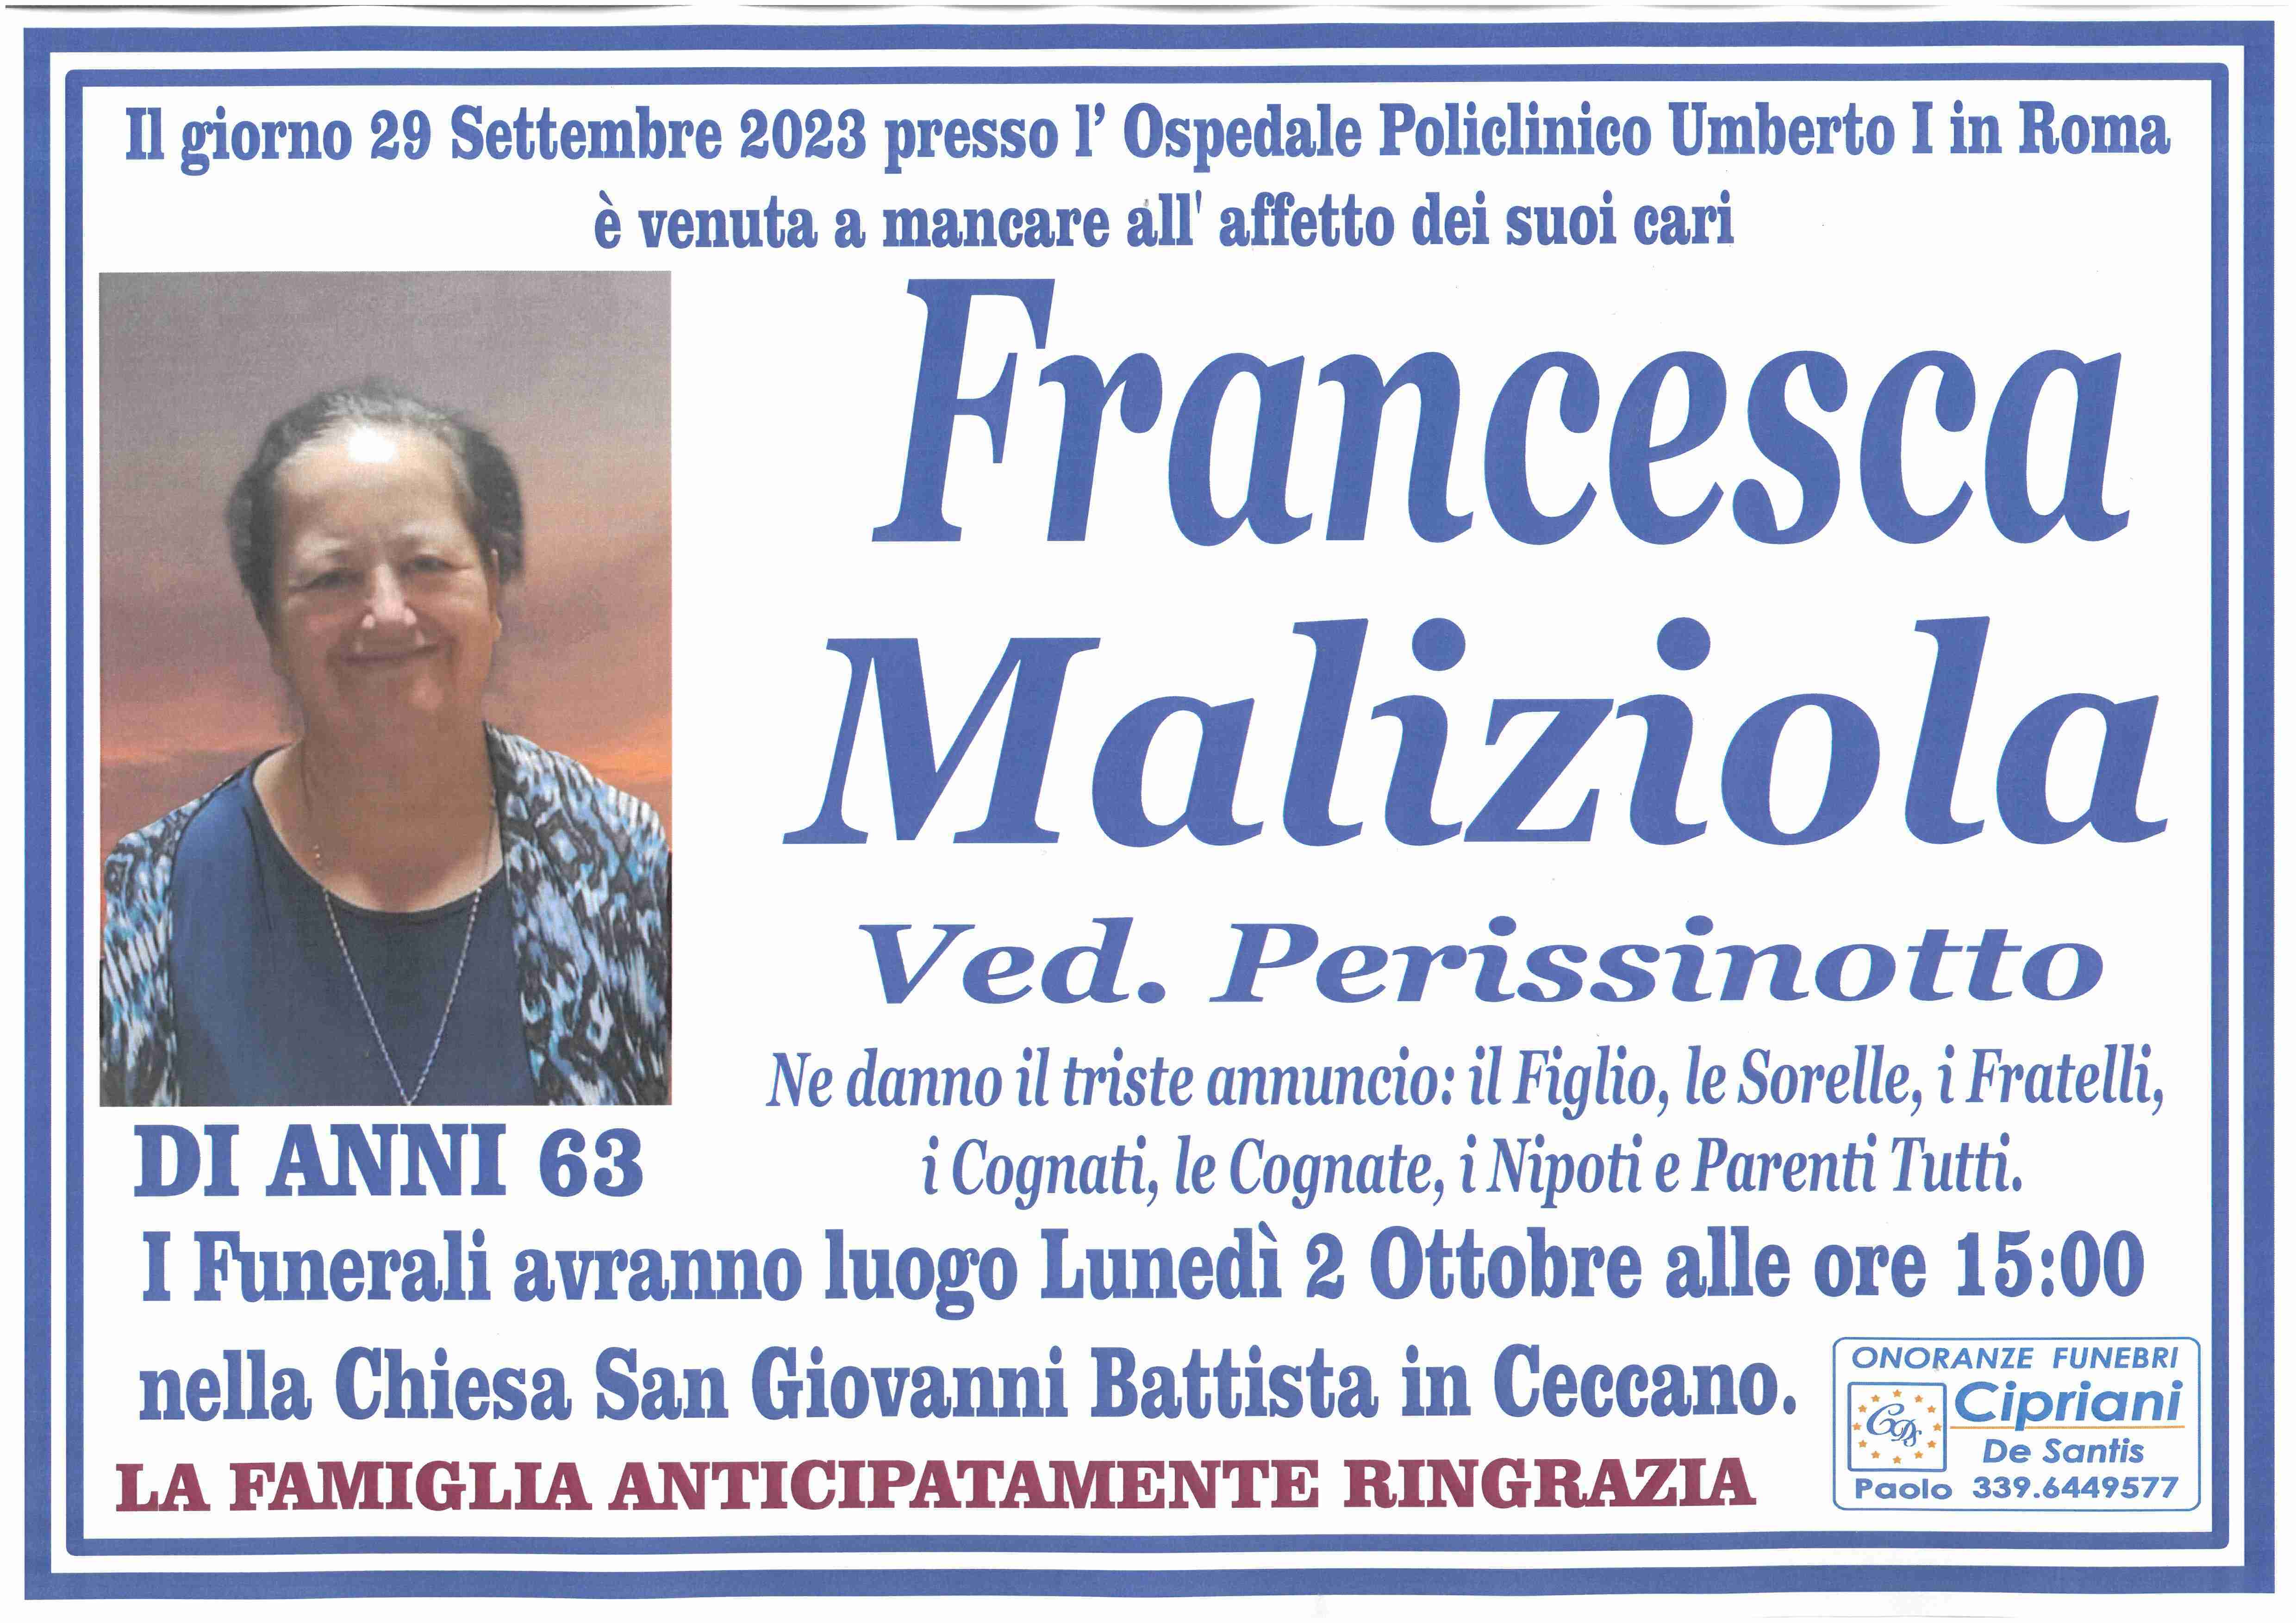 Francesca Maliziola